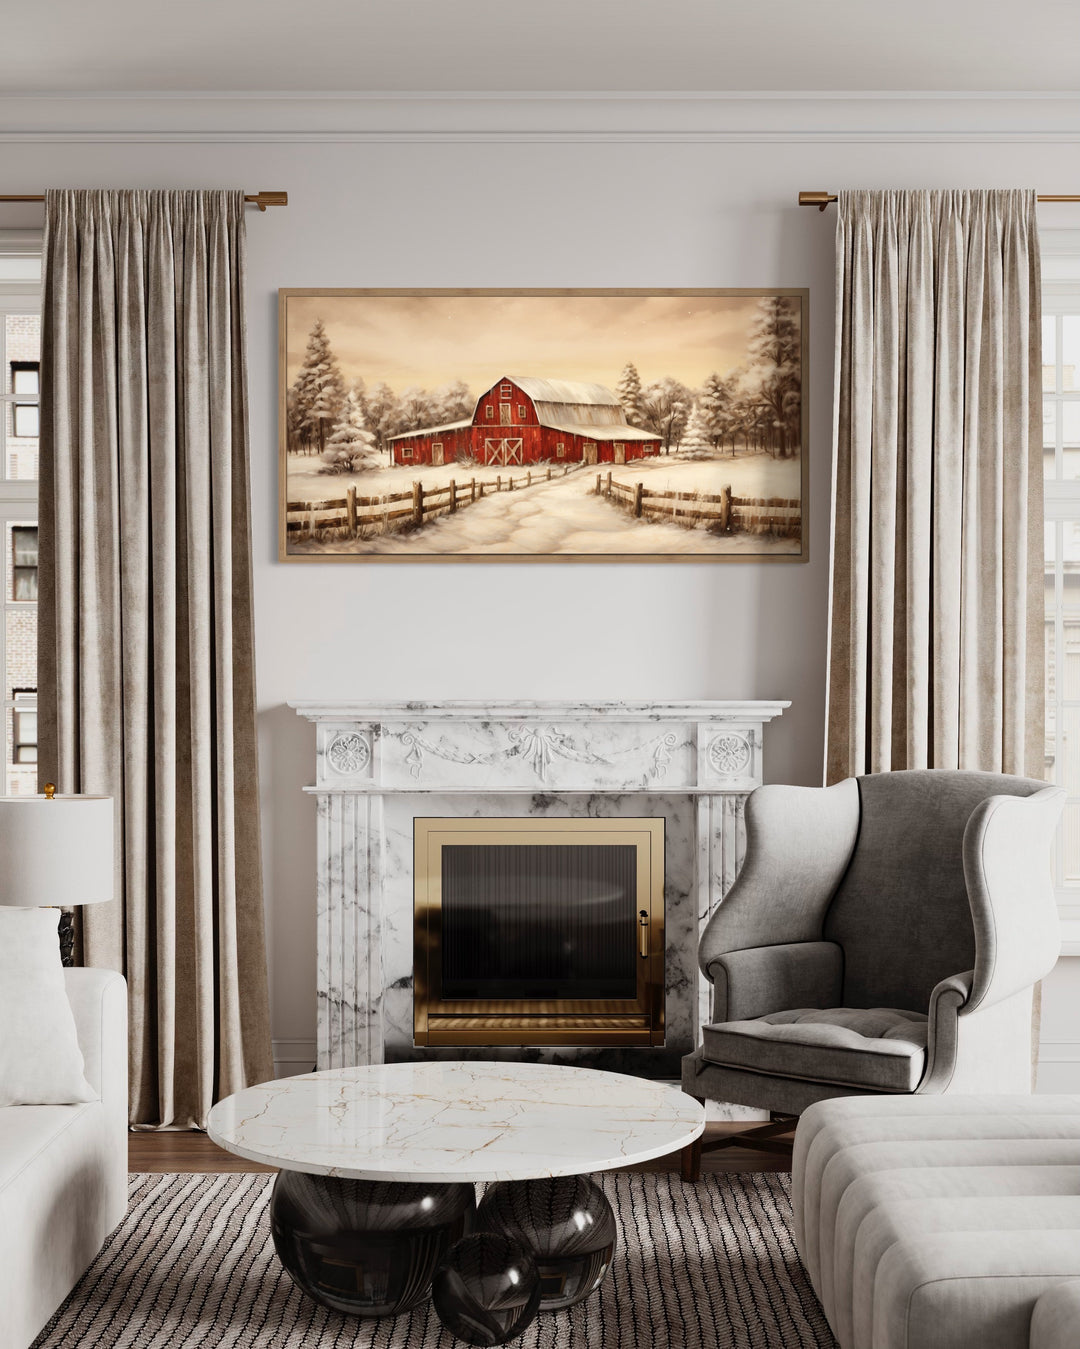 Oak framed Red Barn In Snow Winter Wall Art "Winter Homestead" hanging over mantel